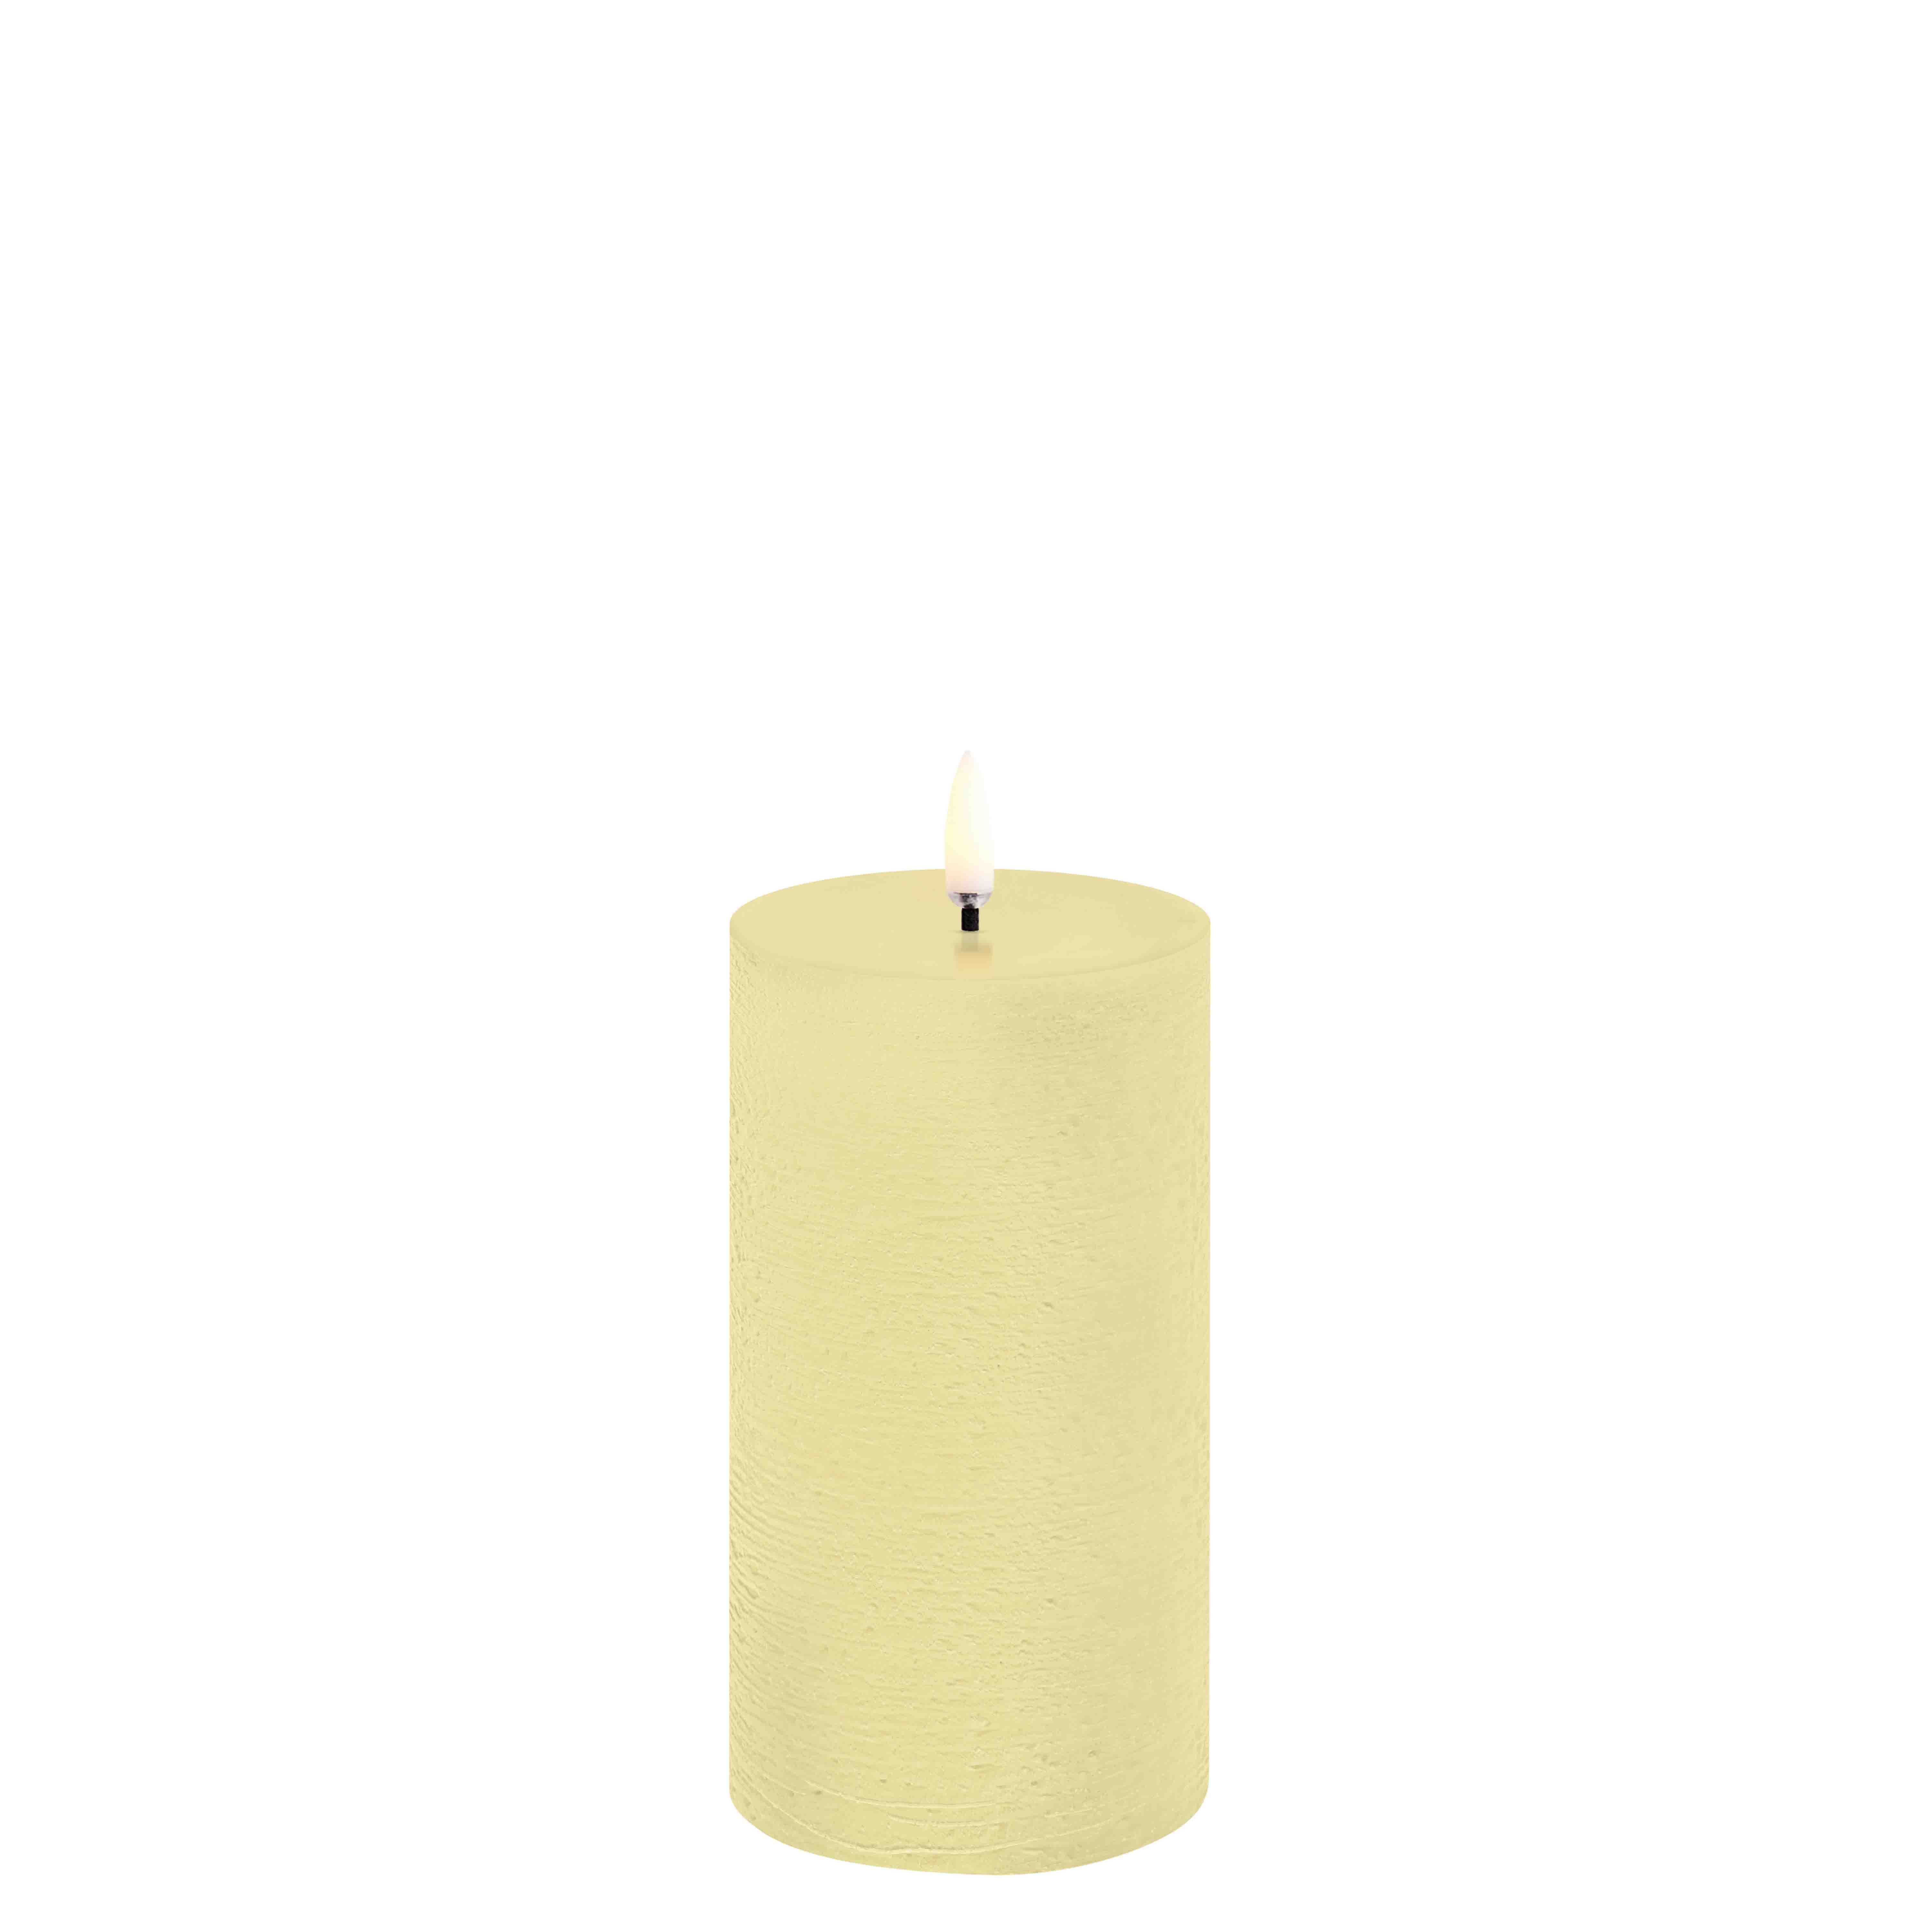 Pillar Candle W7,8 x H15,2 cm